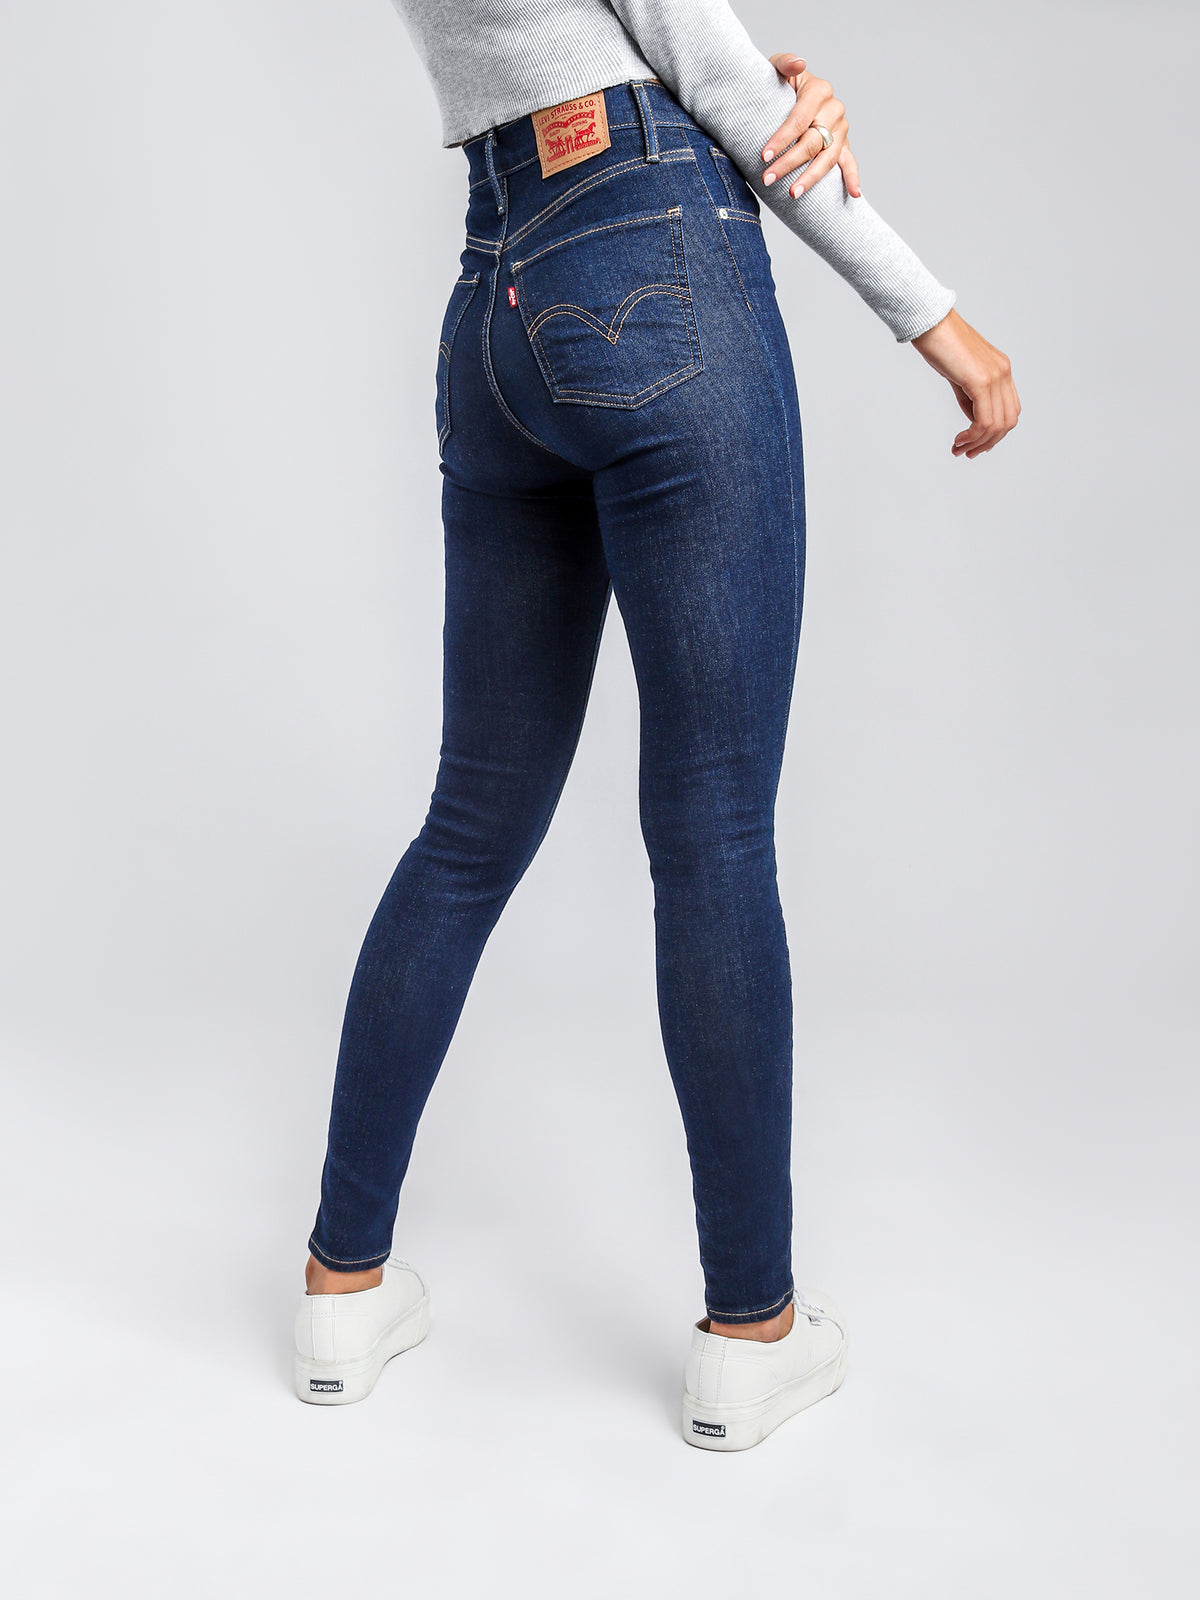 Mile High Super Skinny Jeans in Upgrade Blue Denim